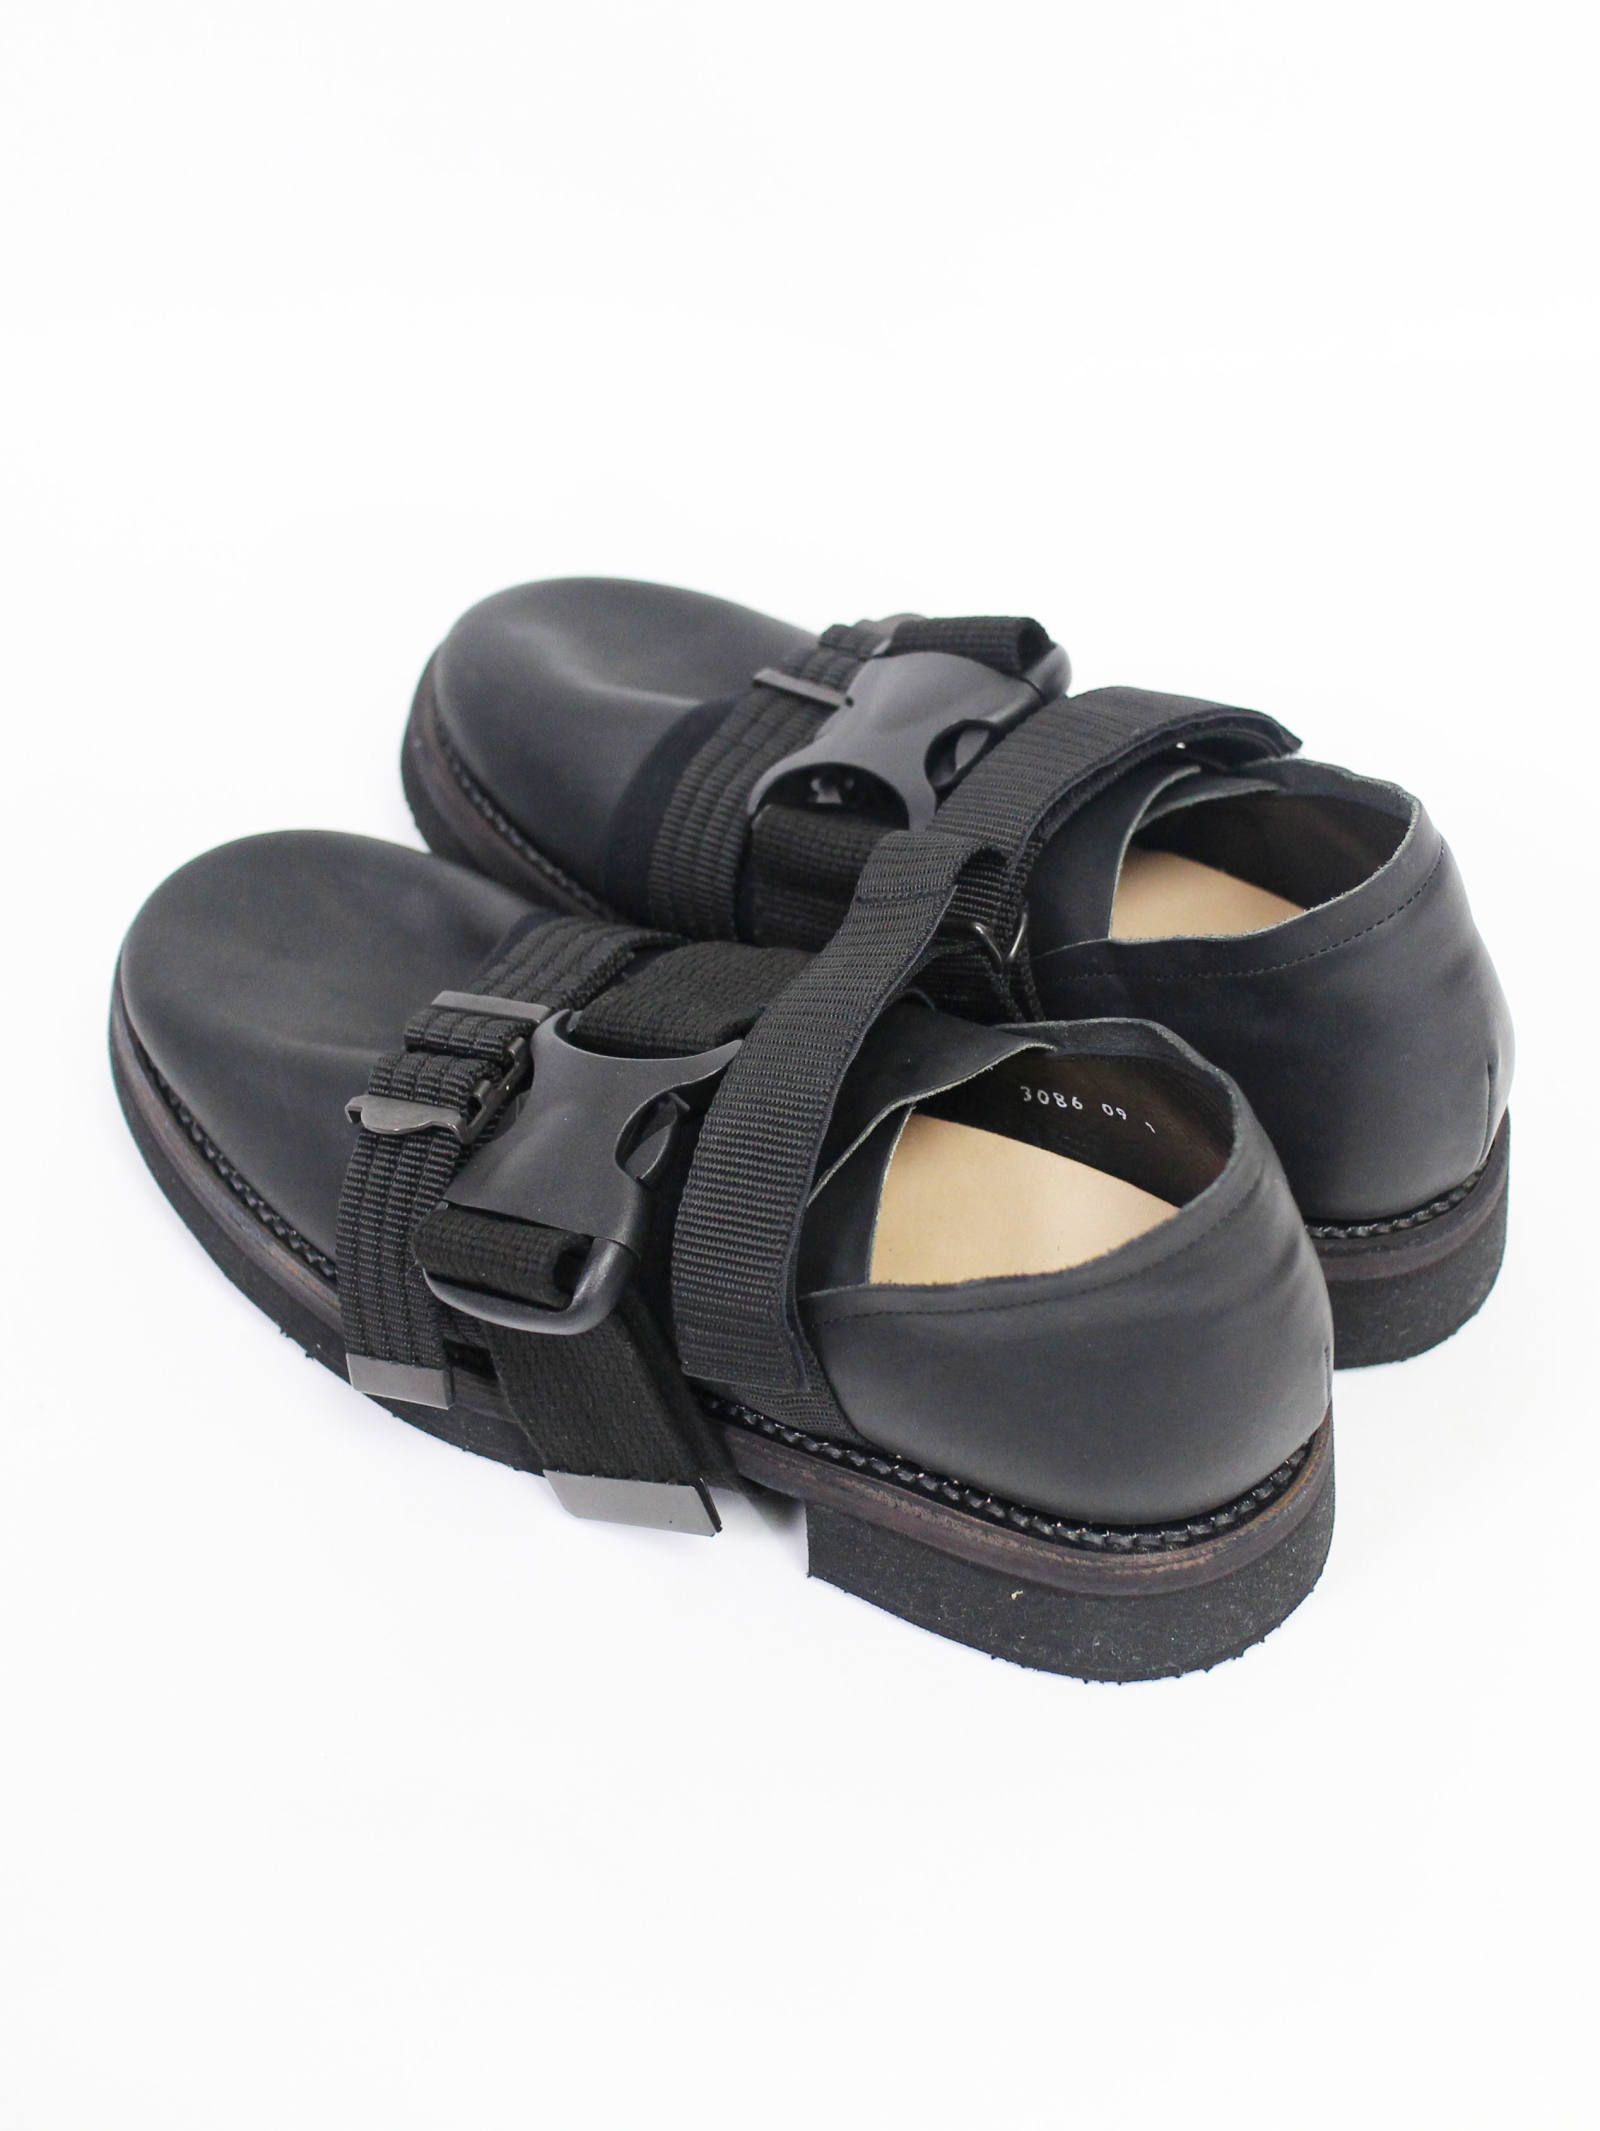 The Viridi-anne - ベルト短靴 - GUIDIレザー | ADDICT WEB SHOP